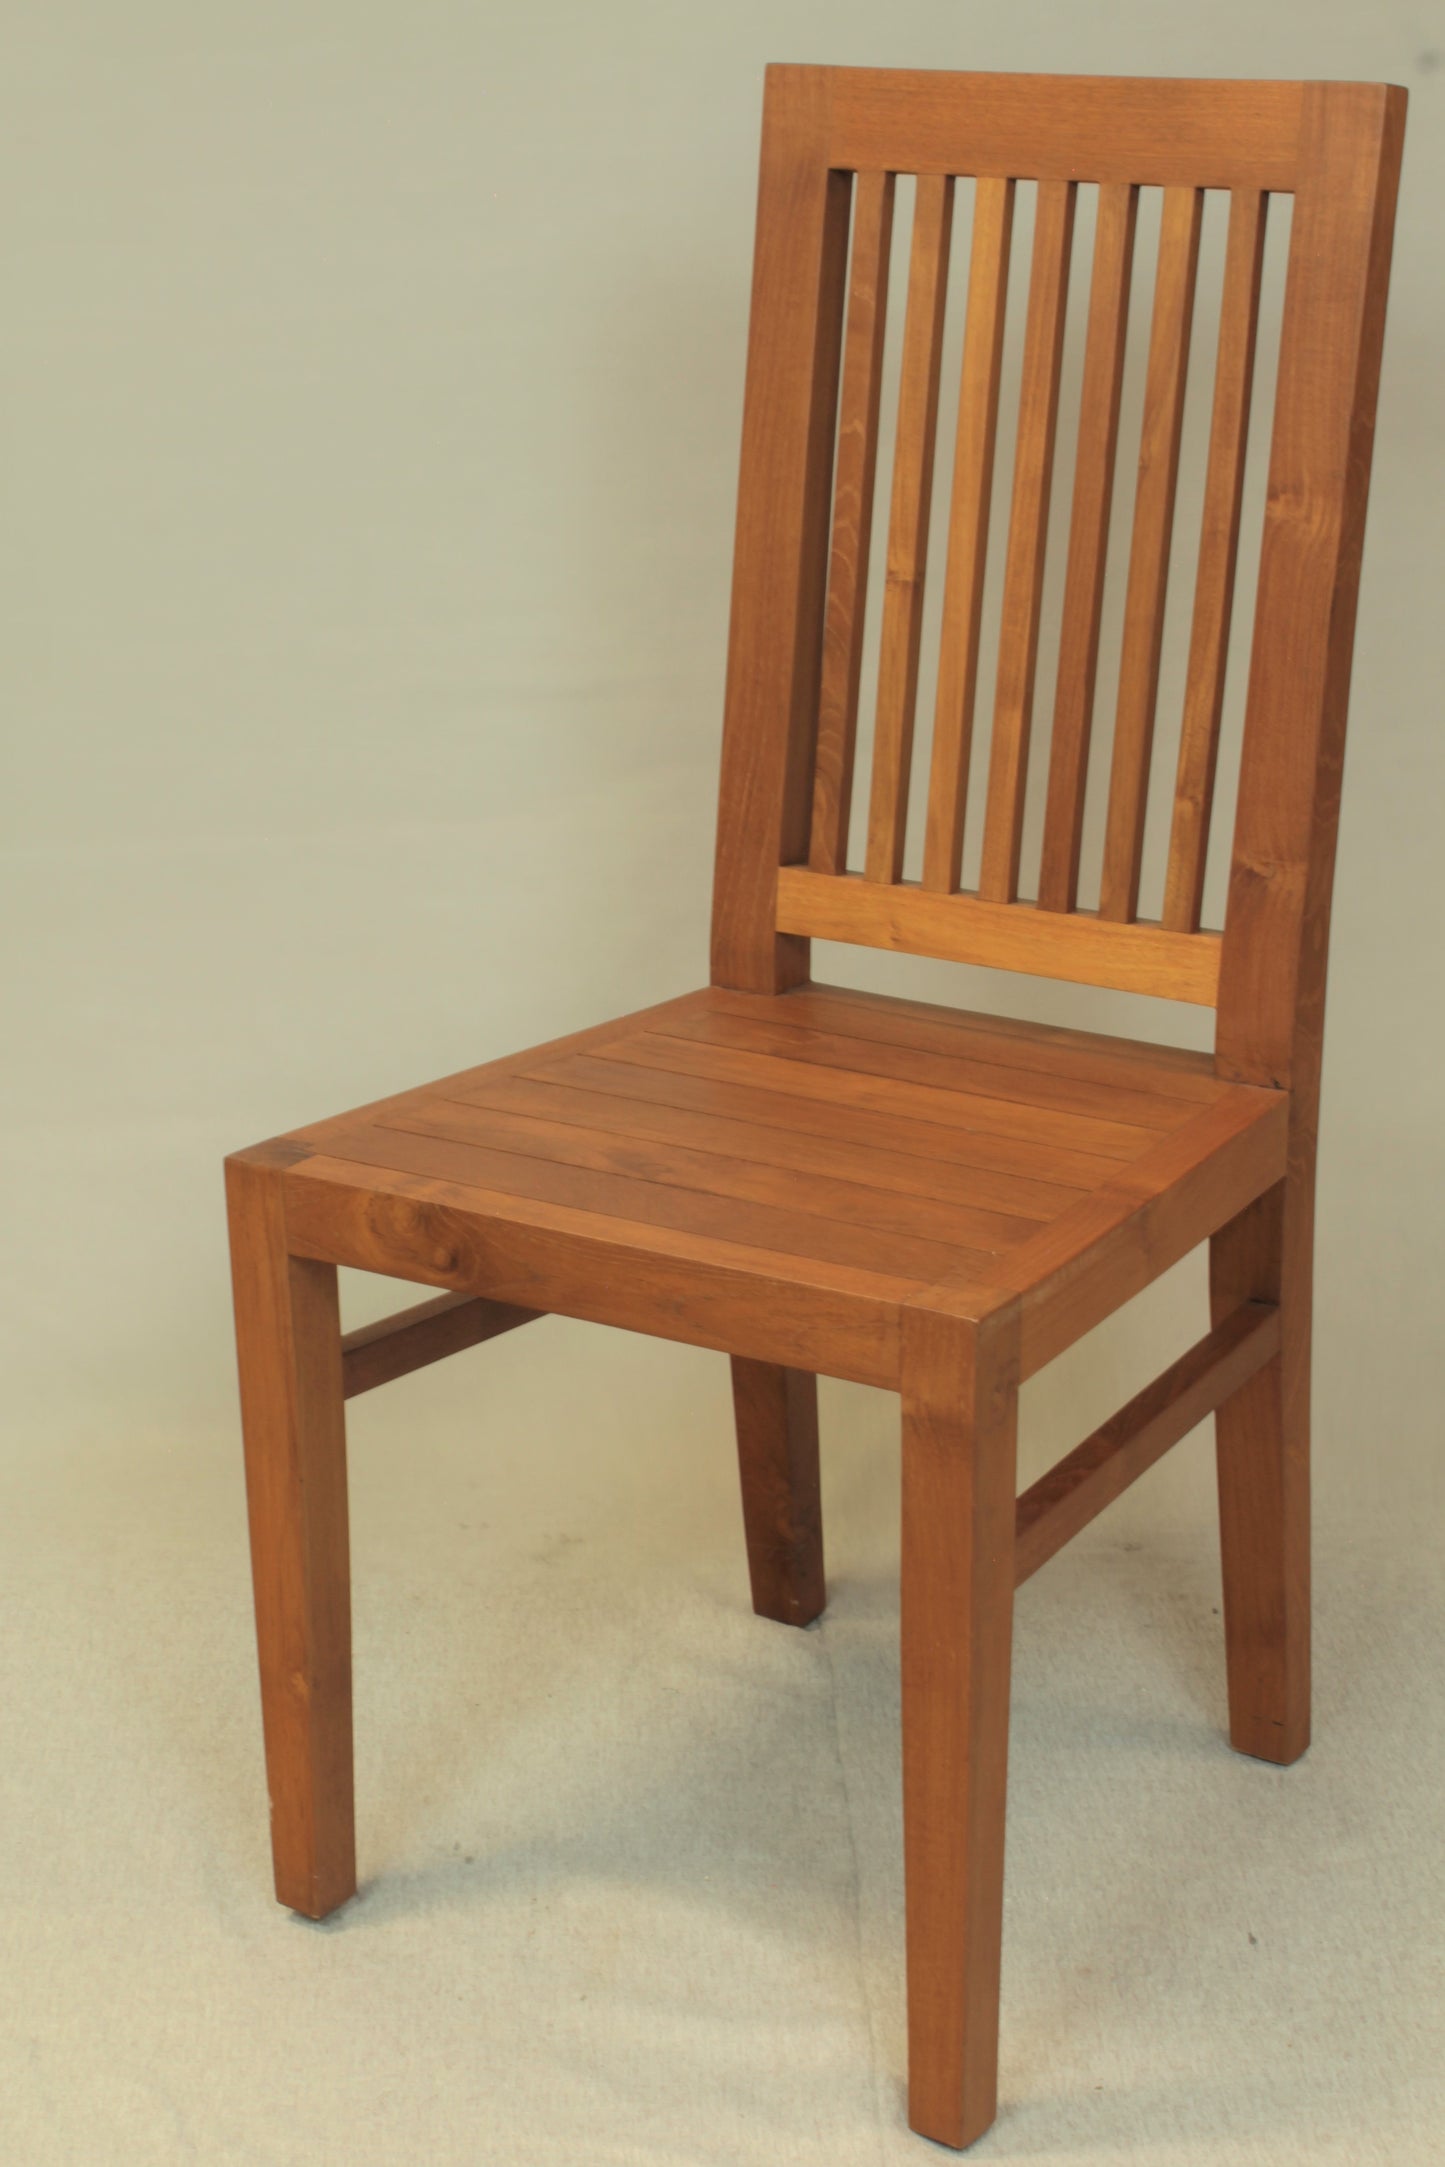 Chair, Shaker